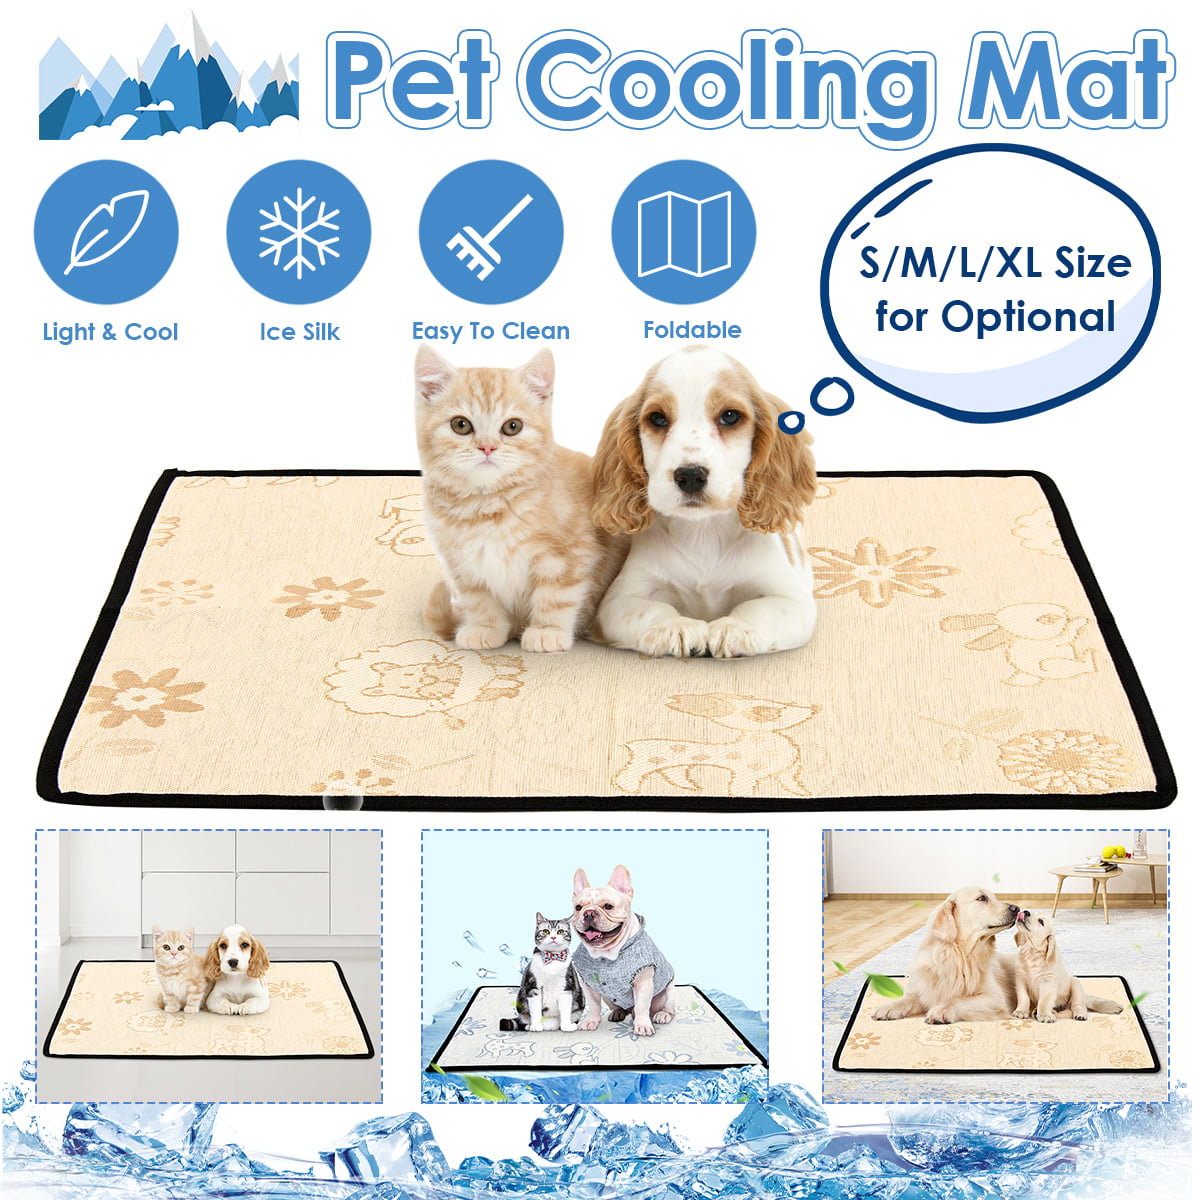 Lightweight Pet Cooling Mat Cat Dog Cushion Pad, Summer Cool Down  Comfortable Soft Ice Silk Sleep Mat for Large Dogs Cats Animal - Walmart.com